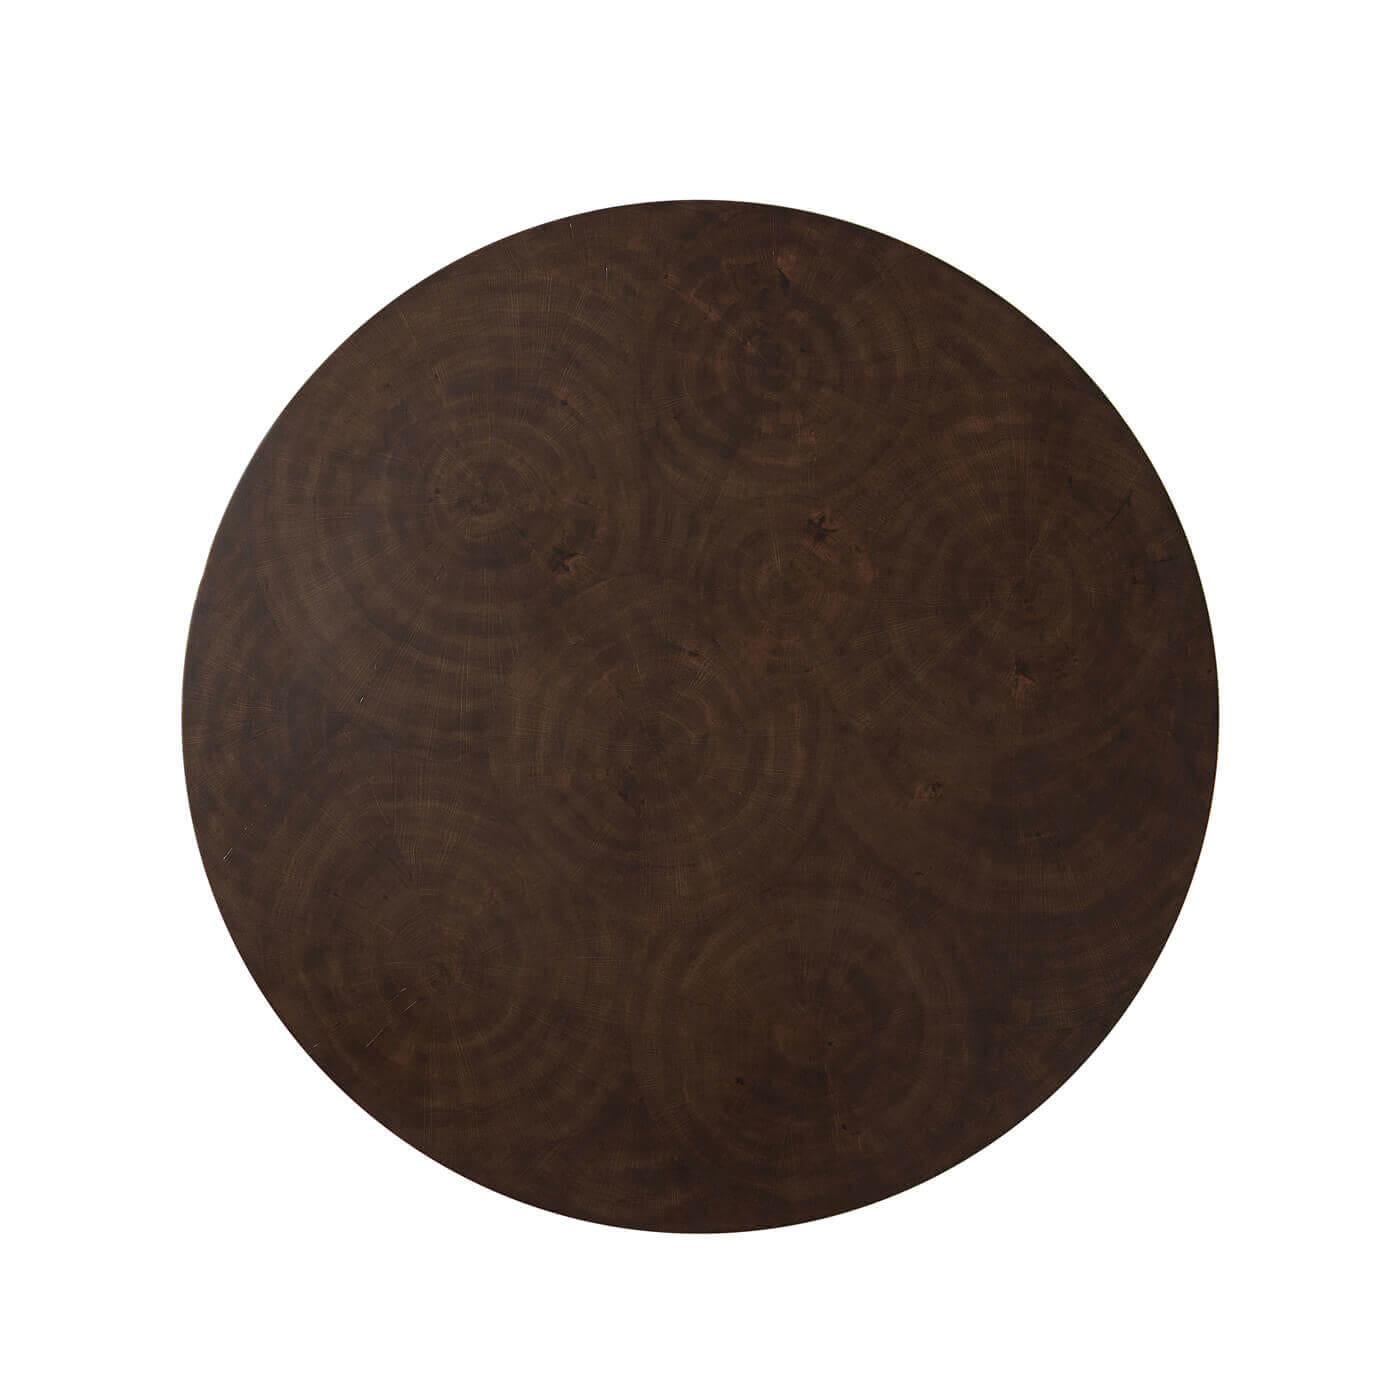 A modern circular oak veneered coffee table. This beautiful table has reclaimed oak veneered curved sides in a 